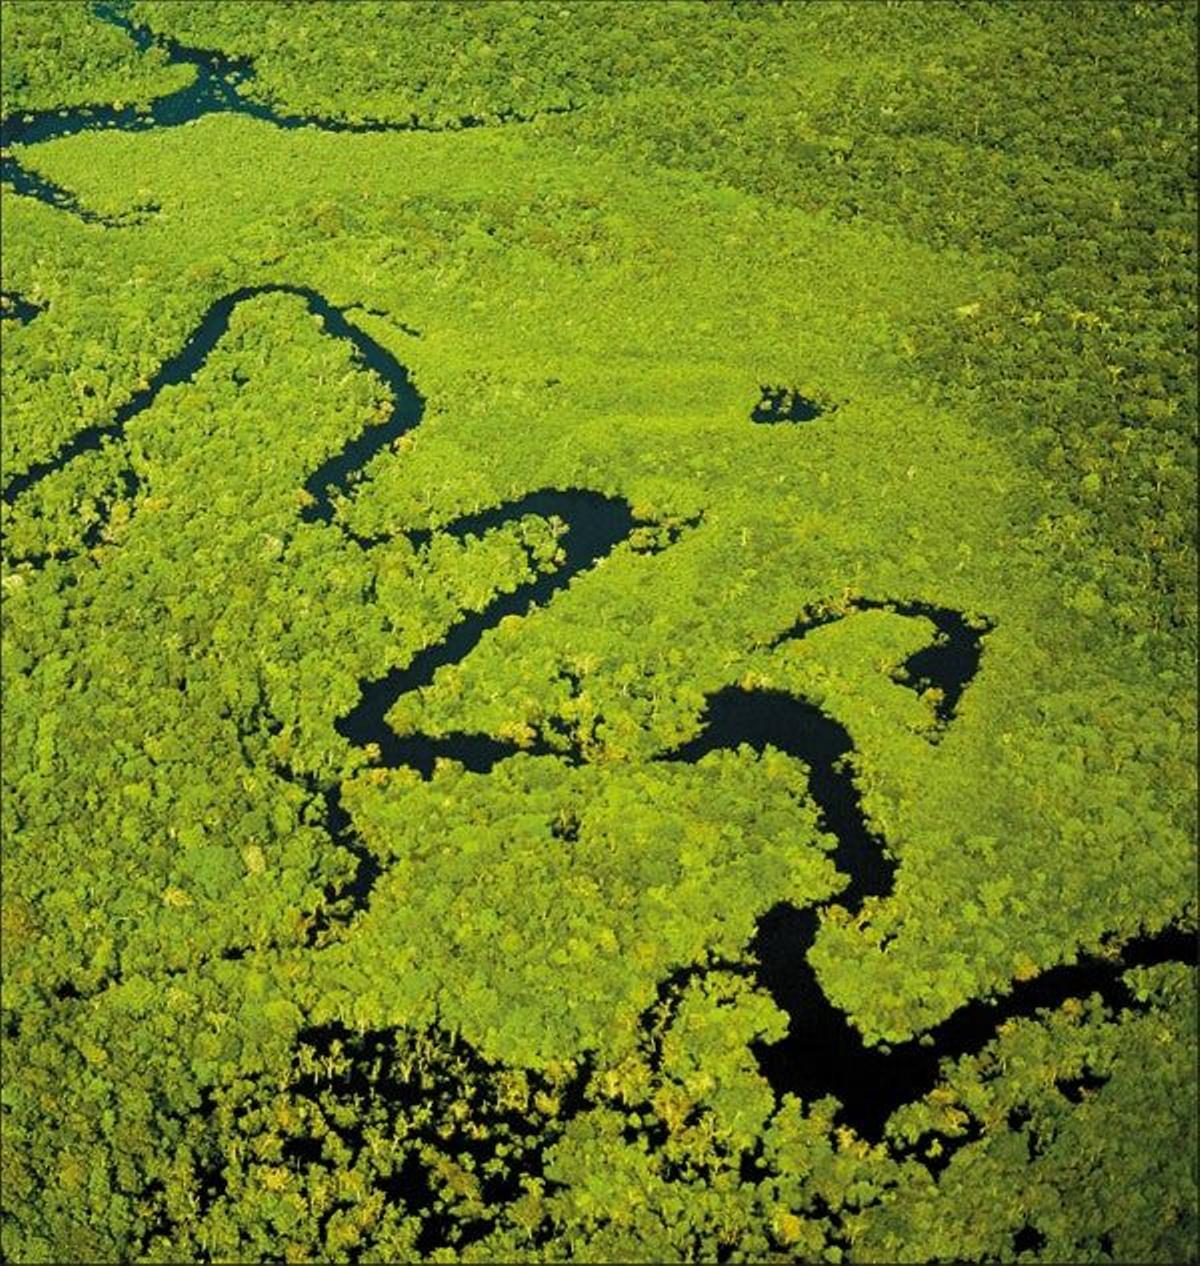 La Selva del Amazonas, el
gran pulmón natural del
planeta, posee una inigualable
riqueza biológica